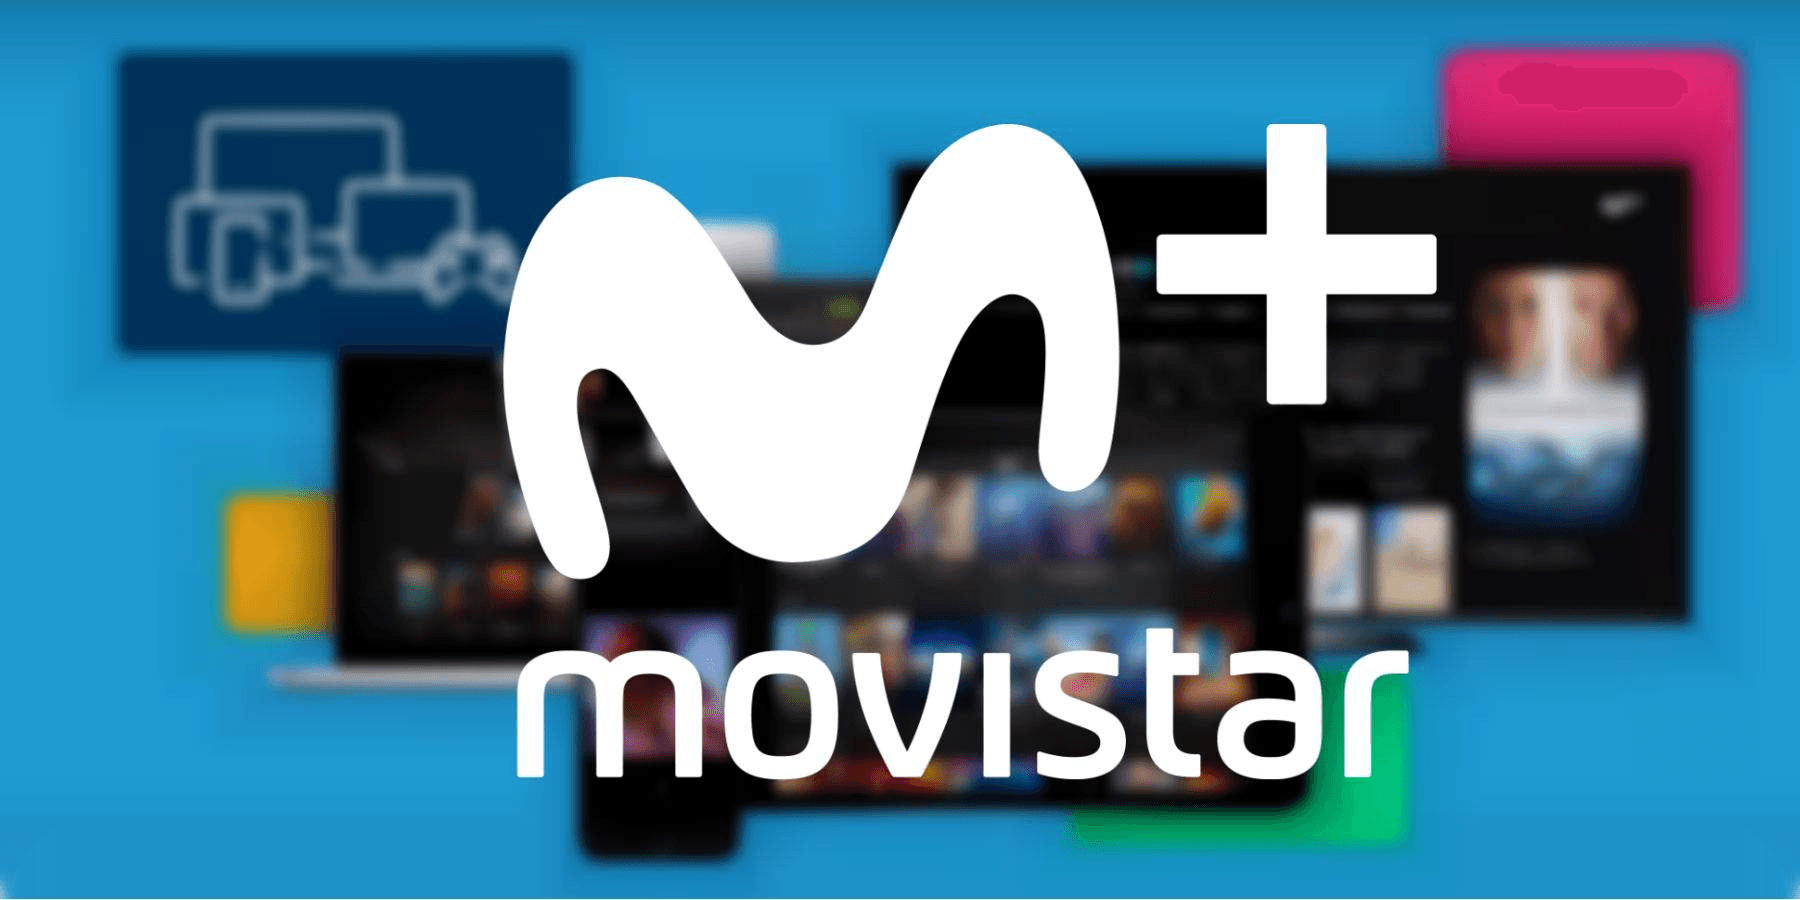 Movistar Tv